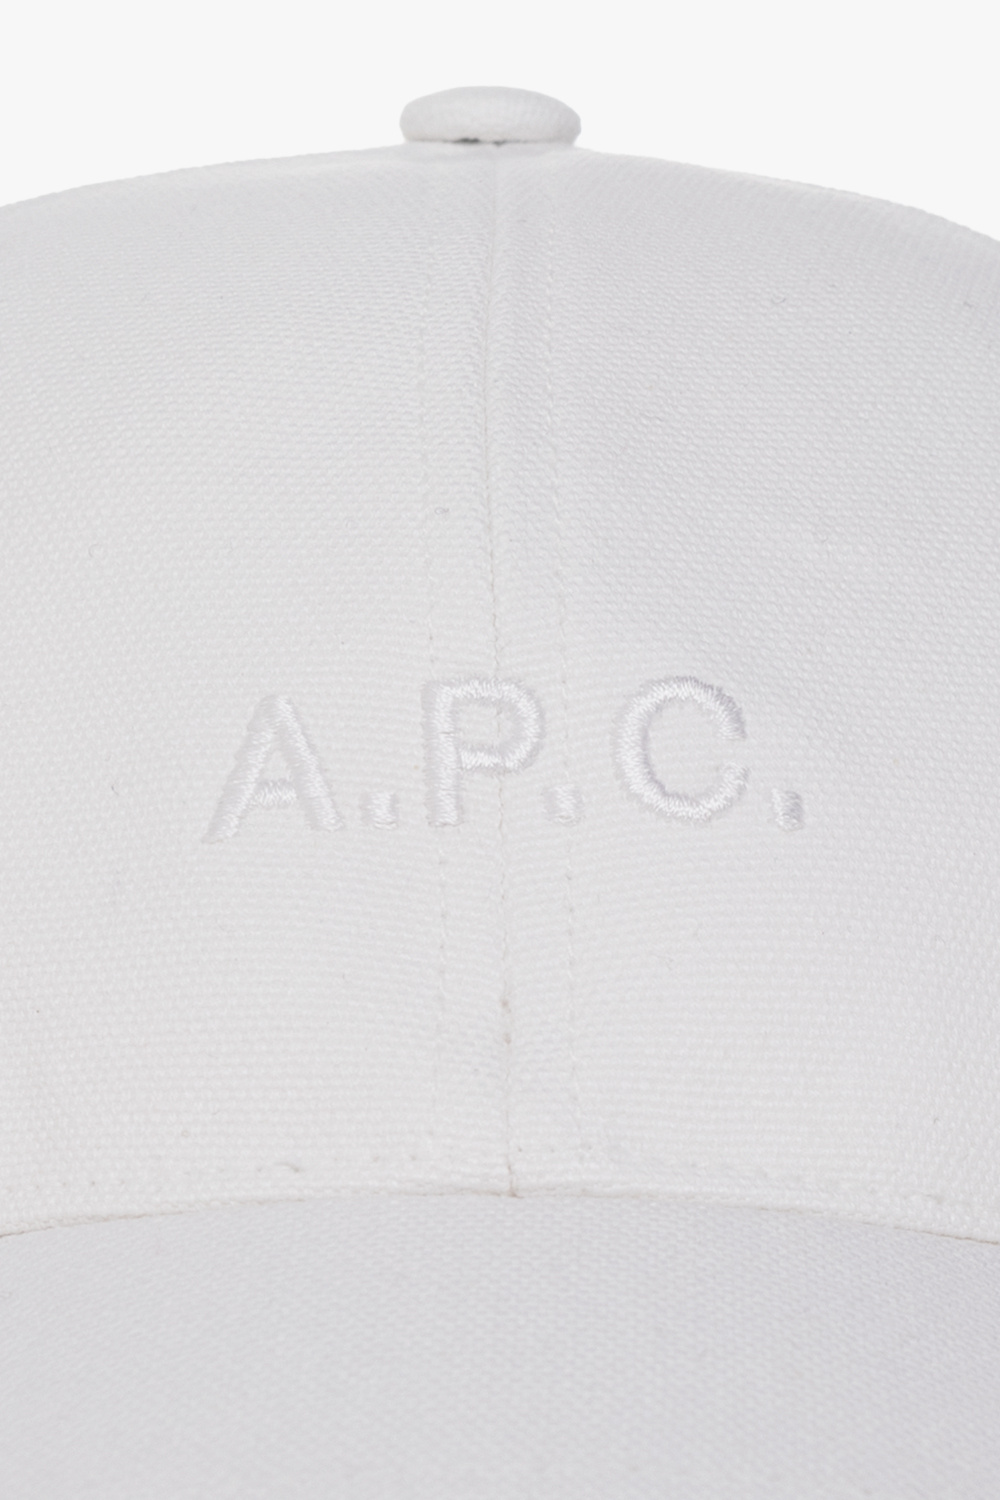 A.P.C. ‘Charlie’ baseball cap